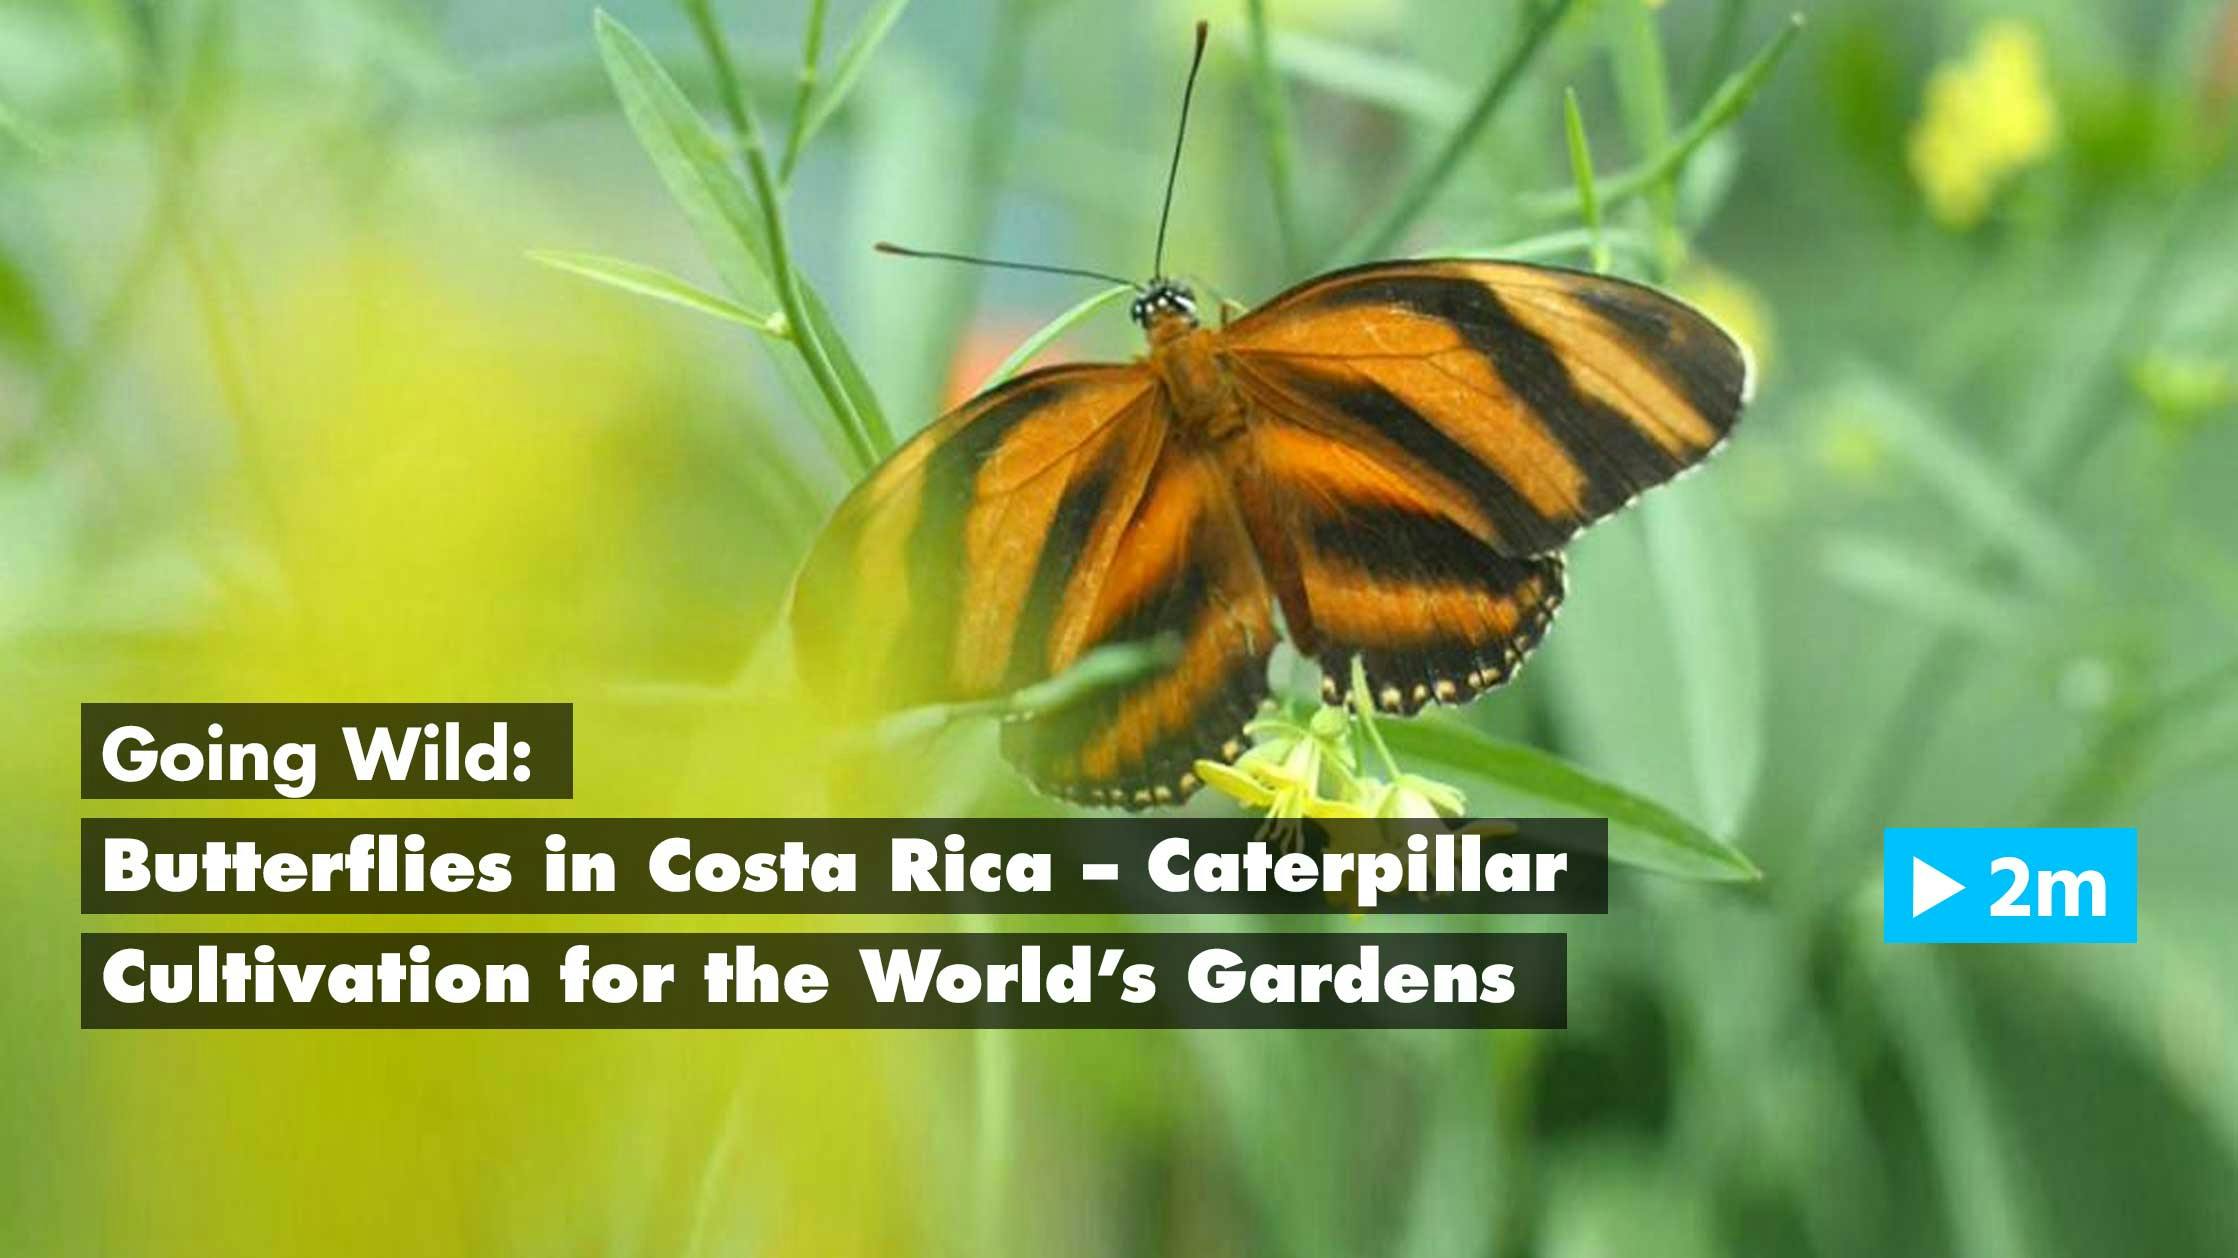 Going Wild: Butterflies in Costa Rica – Caterpillar Cultivation for the World’s Gardens